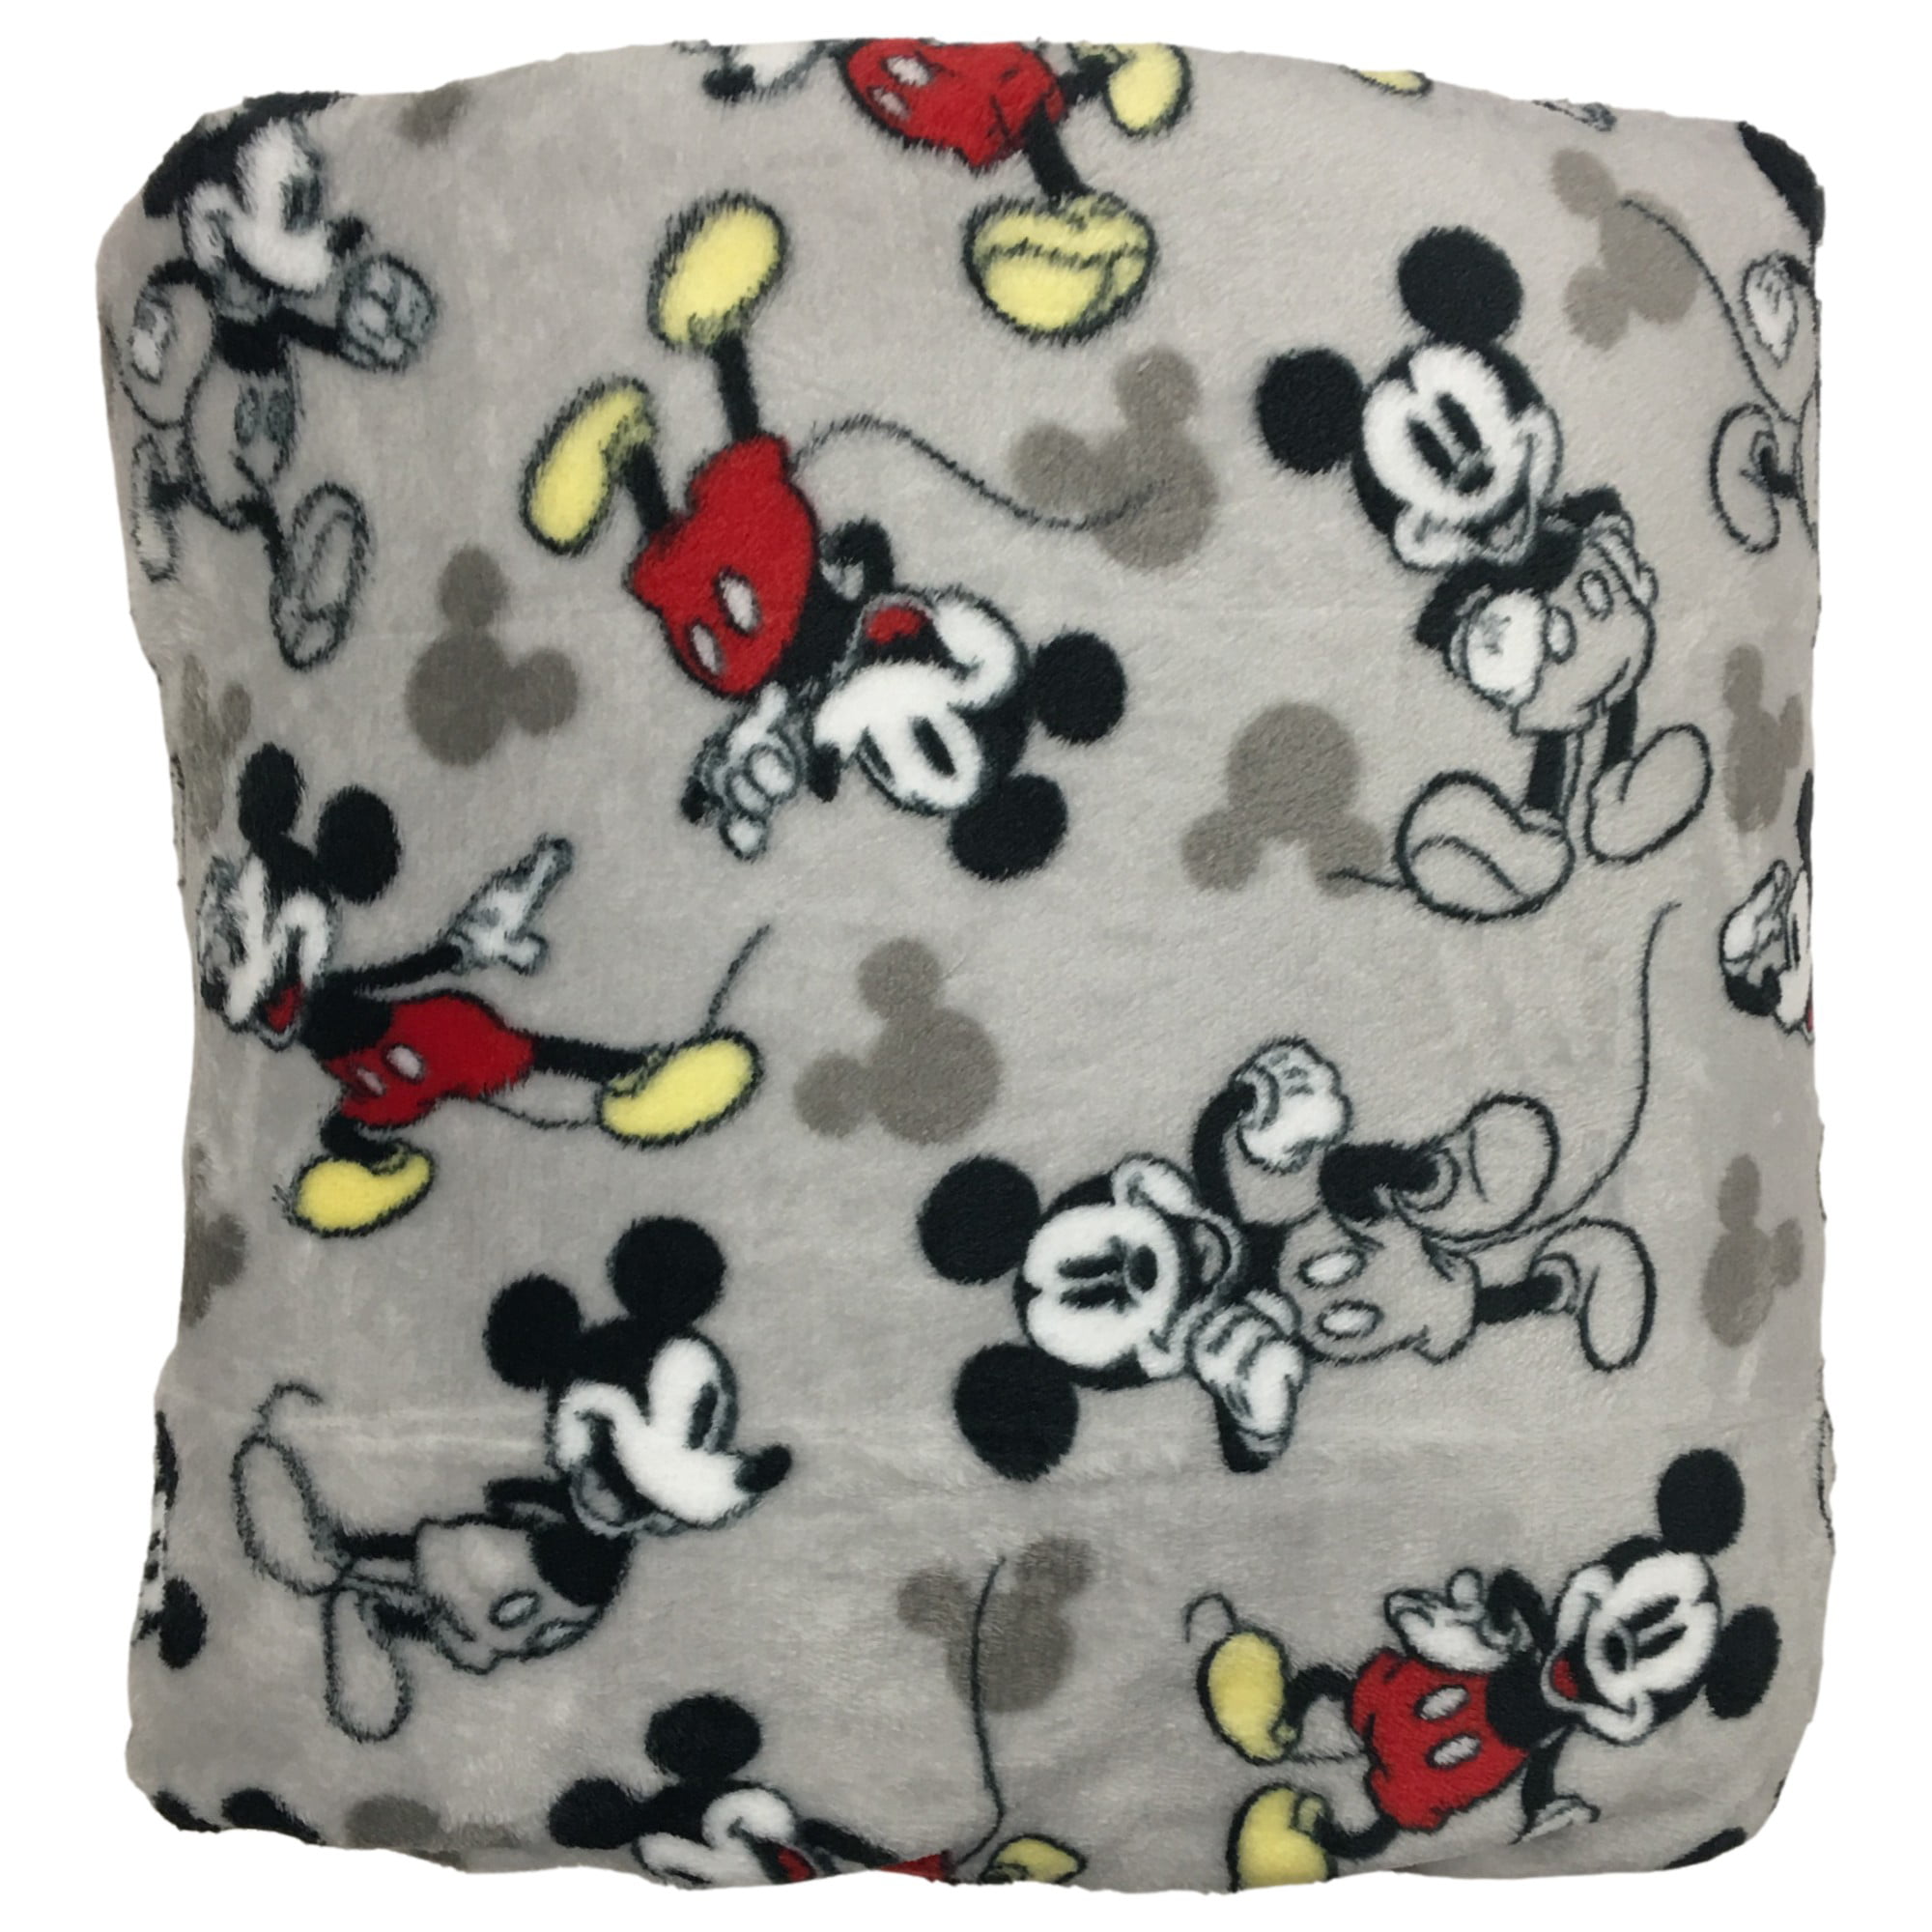 New Disney The Big One Disney Minnie Mouse Mickey Mouse Throw Blanket 60"x72" 